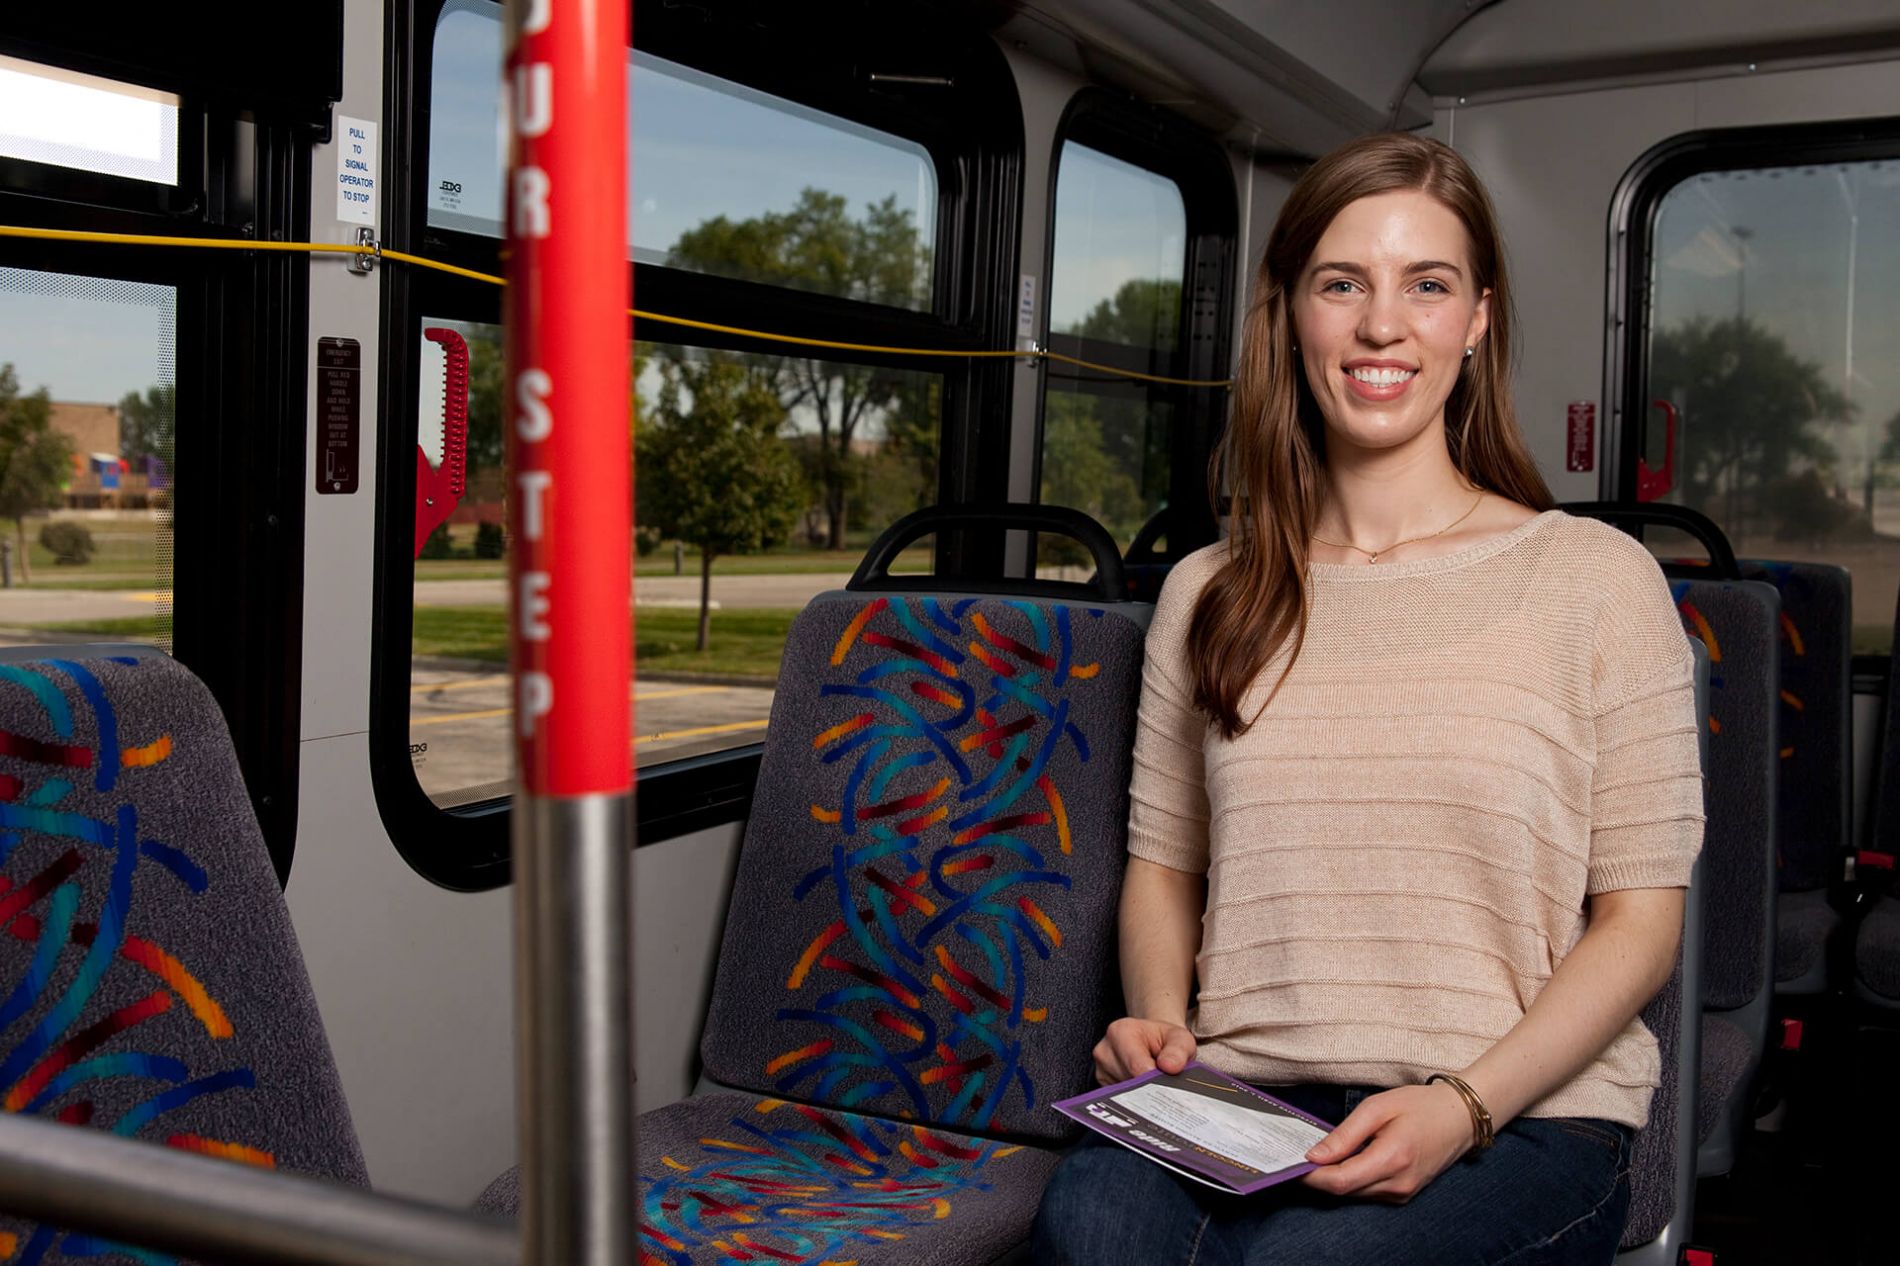 Young woman riding a Dial-A-Ride bus